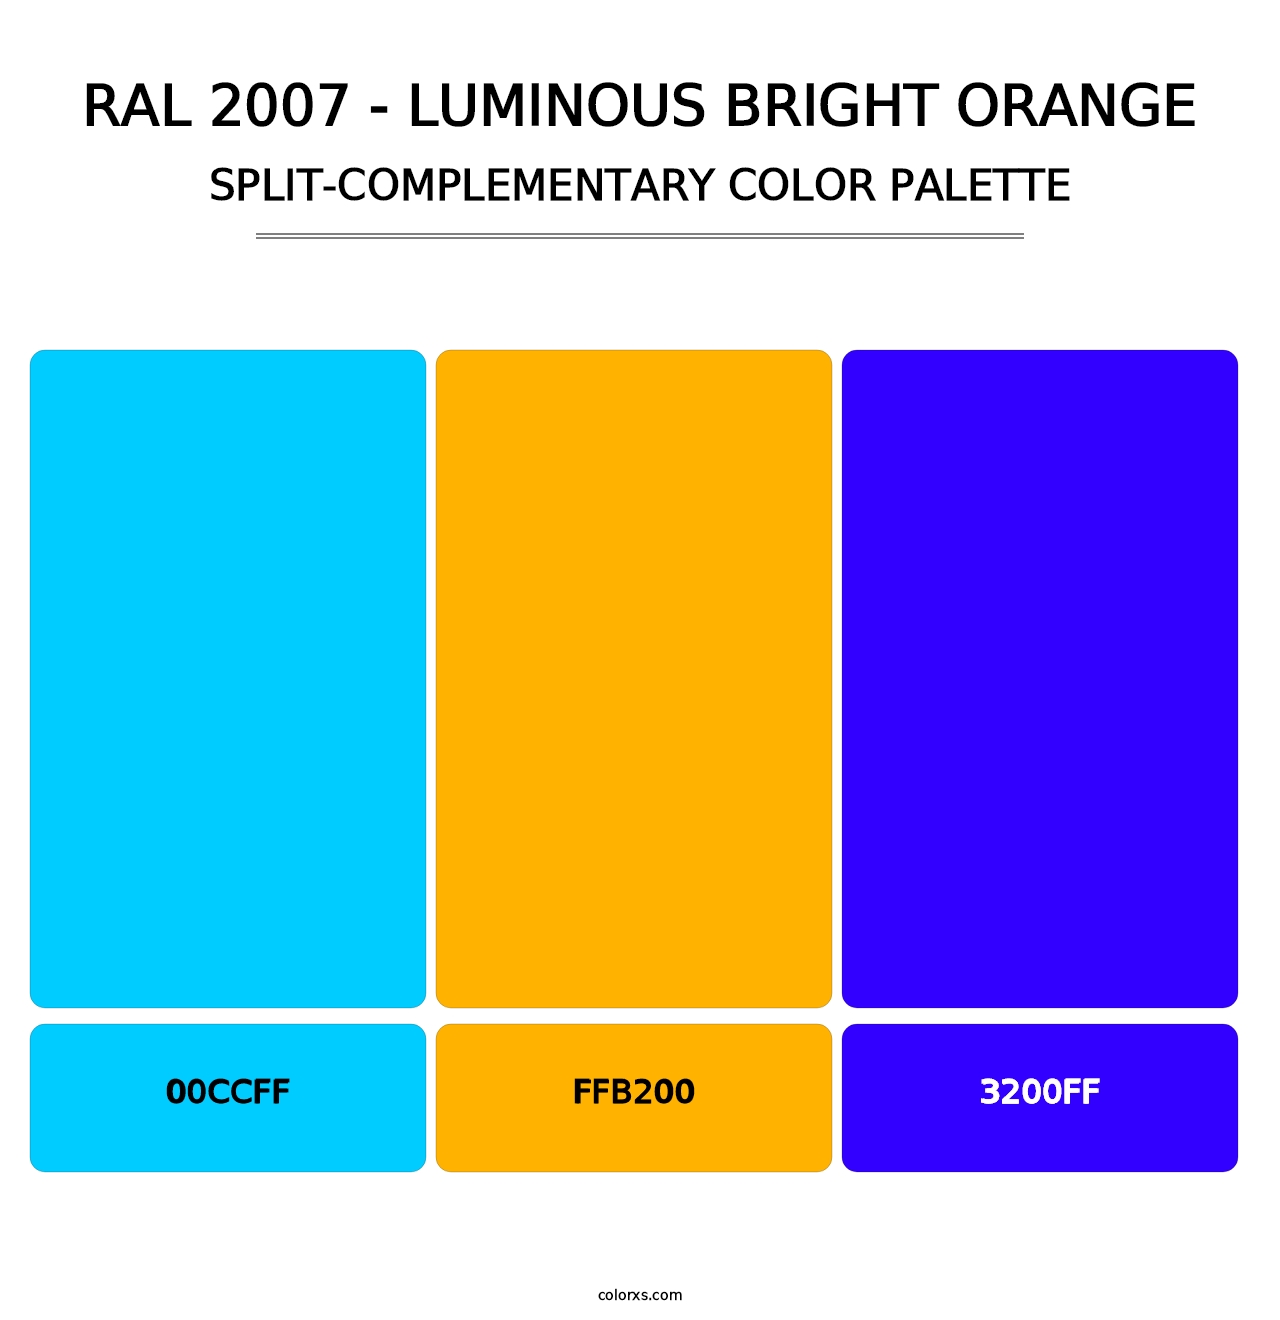 RAL 2007 - Luminous Bright Orange - Split-Complementary Color Palette